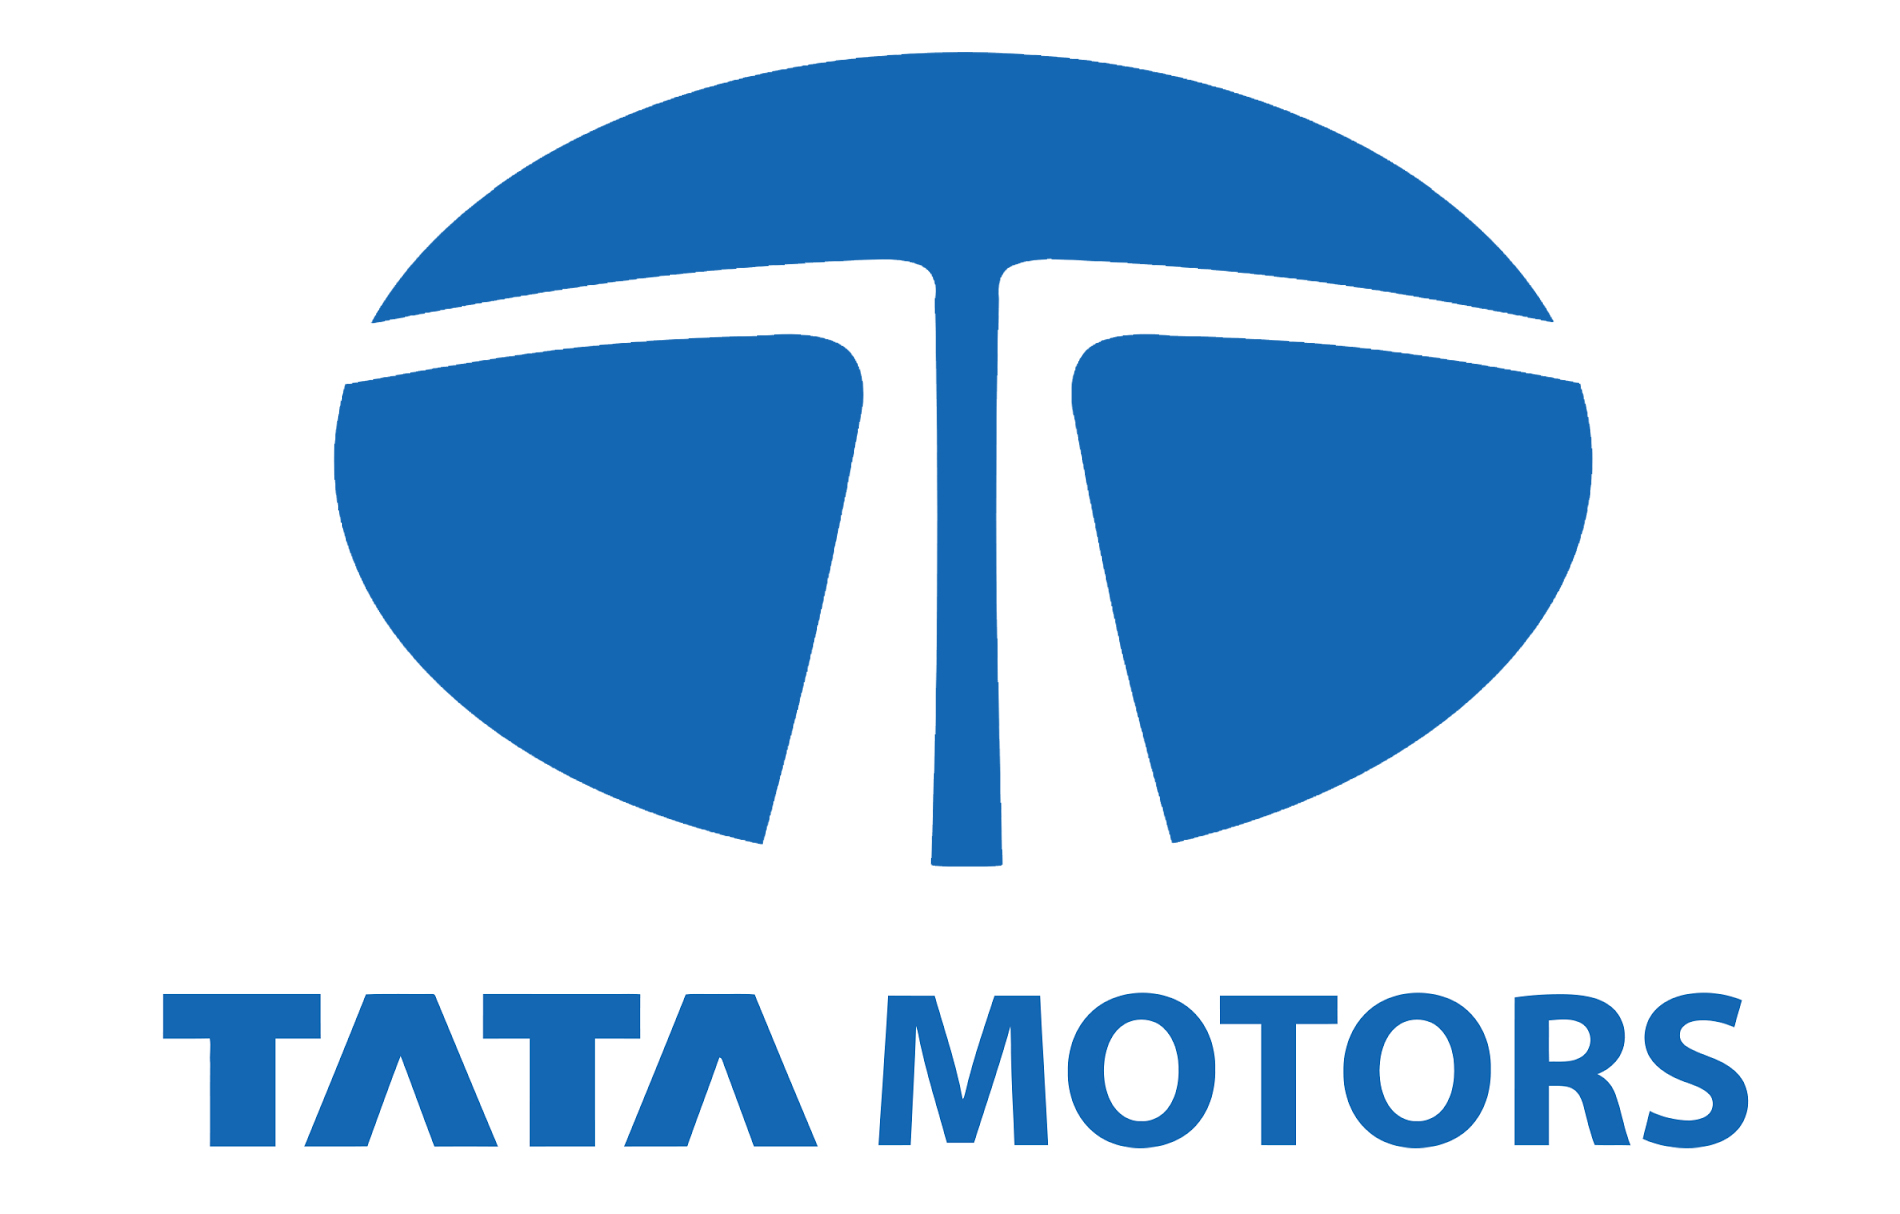 Tata Motors Cars Showroom - Champak Automobiles Private Limited Logo